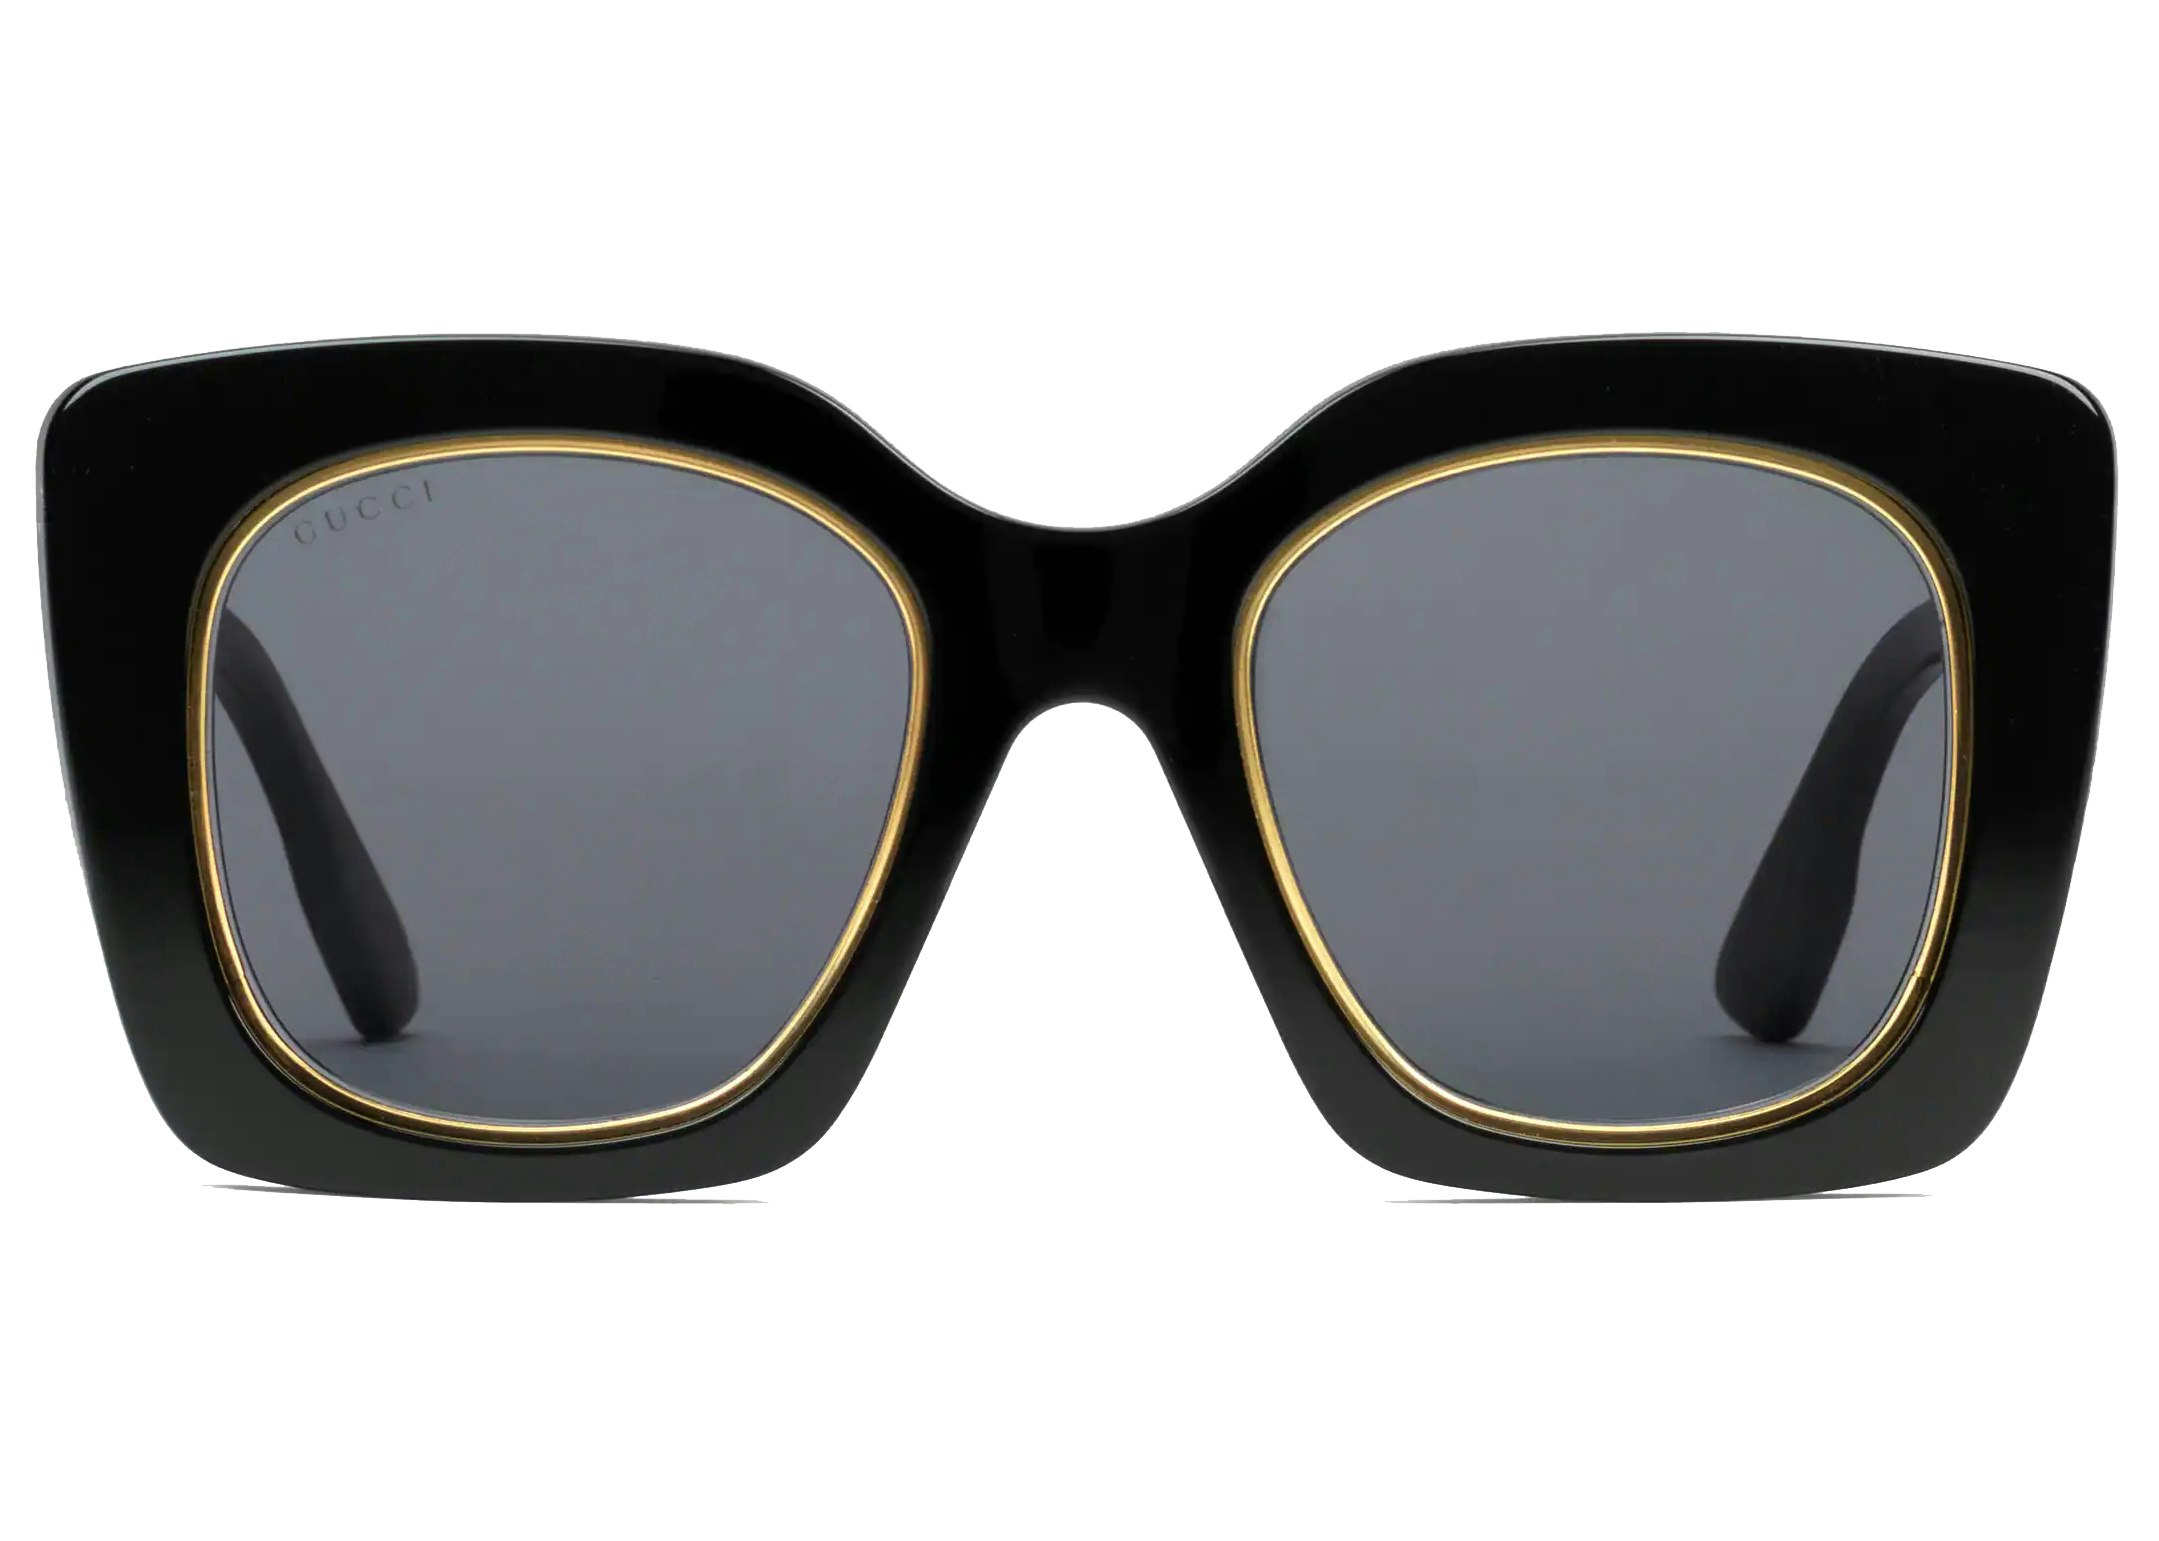 Gucci - Square Frame Sunglasses - Red and Black Tortoiseshell - Gucci  Eyewear - Avvenice